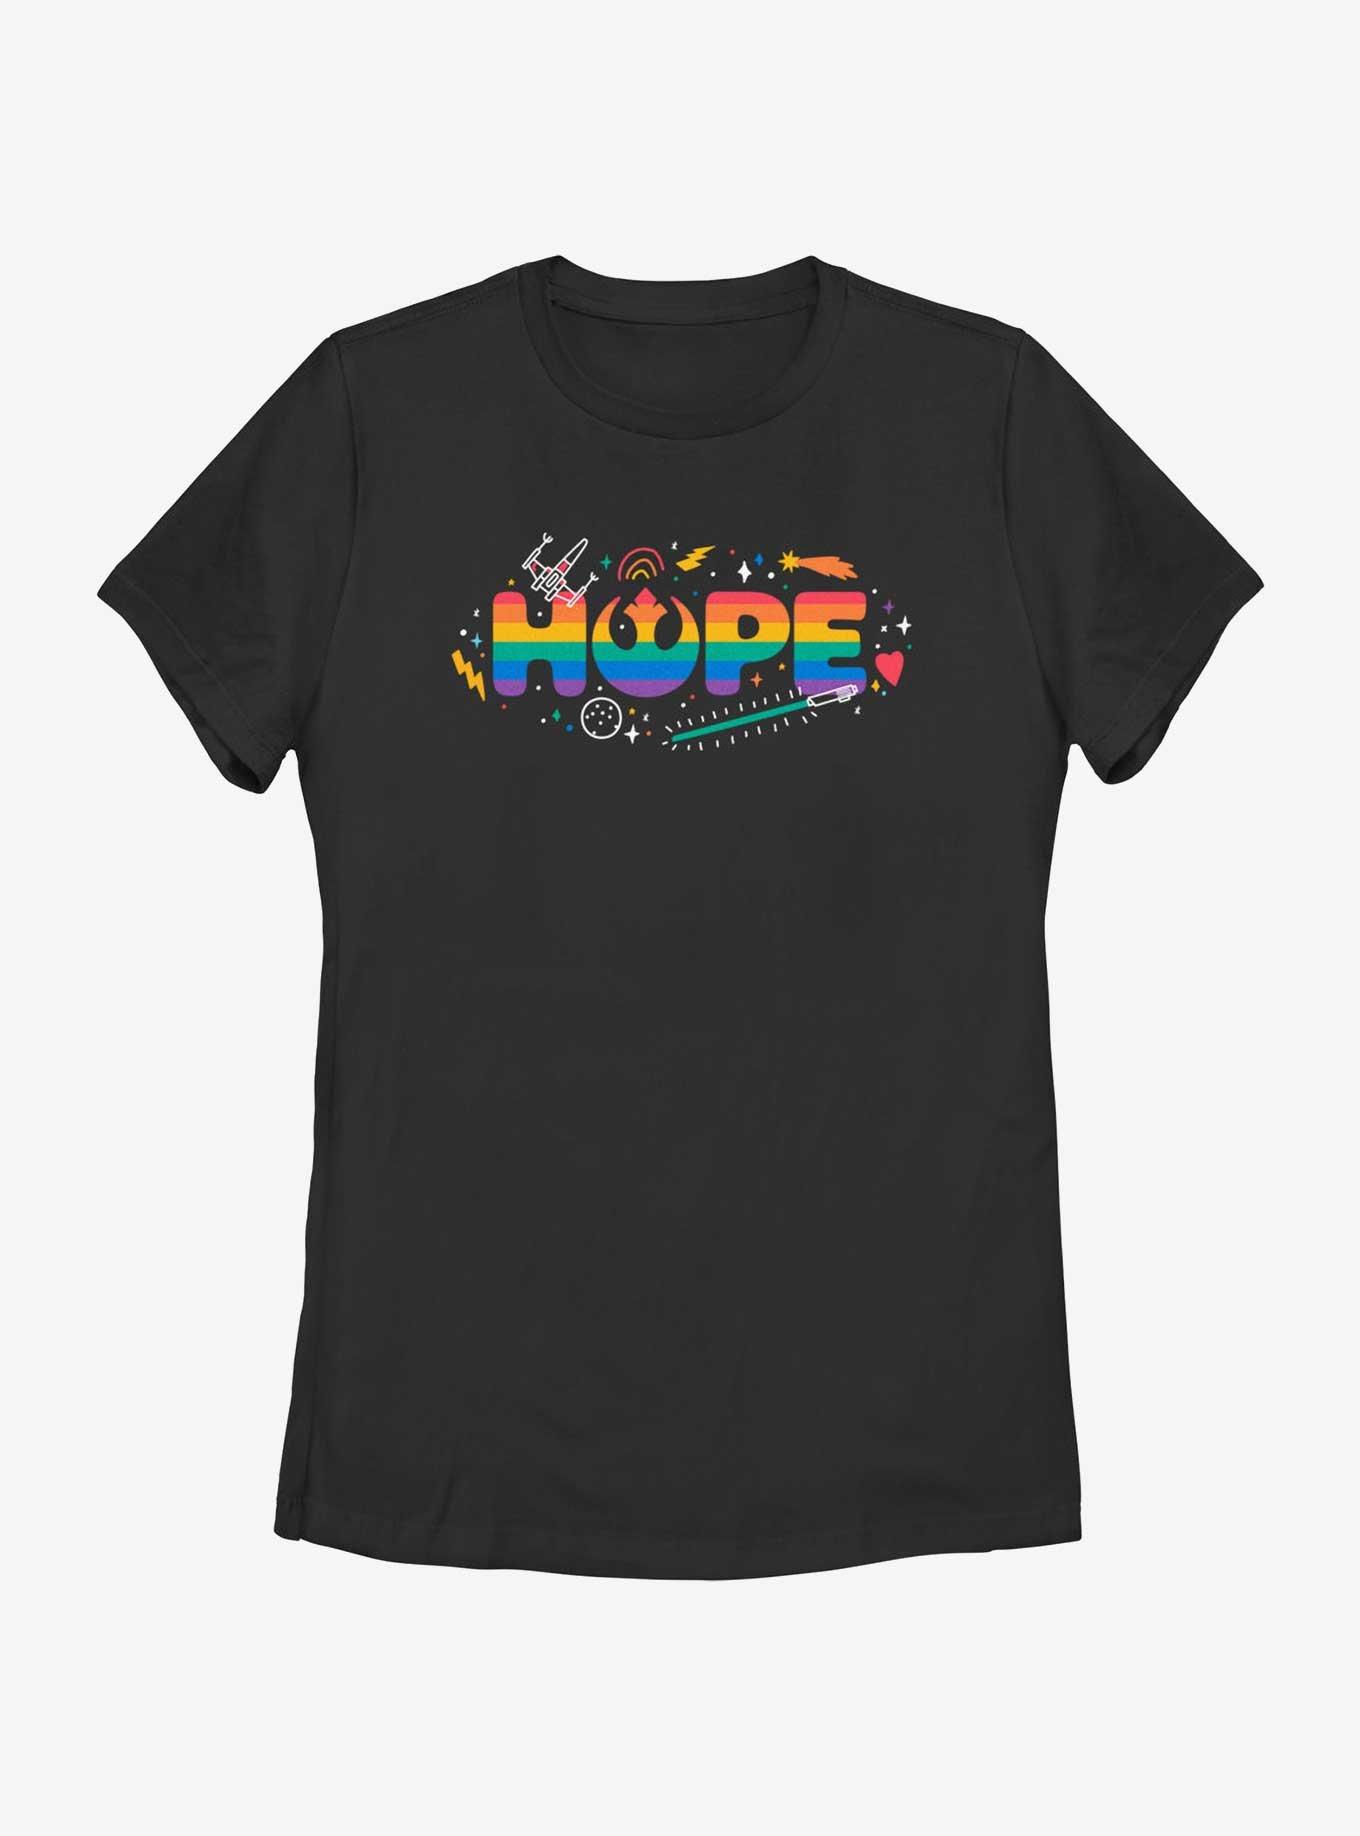 Star Wars Hope Rebels Pride Pride T-Shirt, BLACK, hi-res